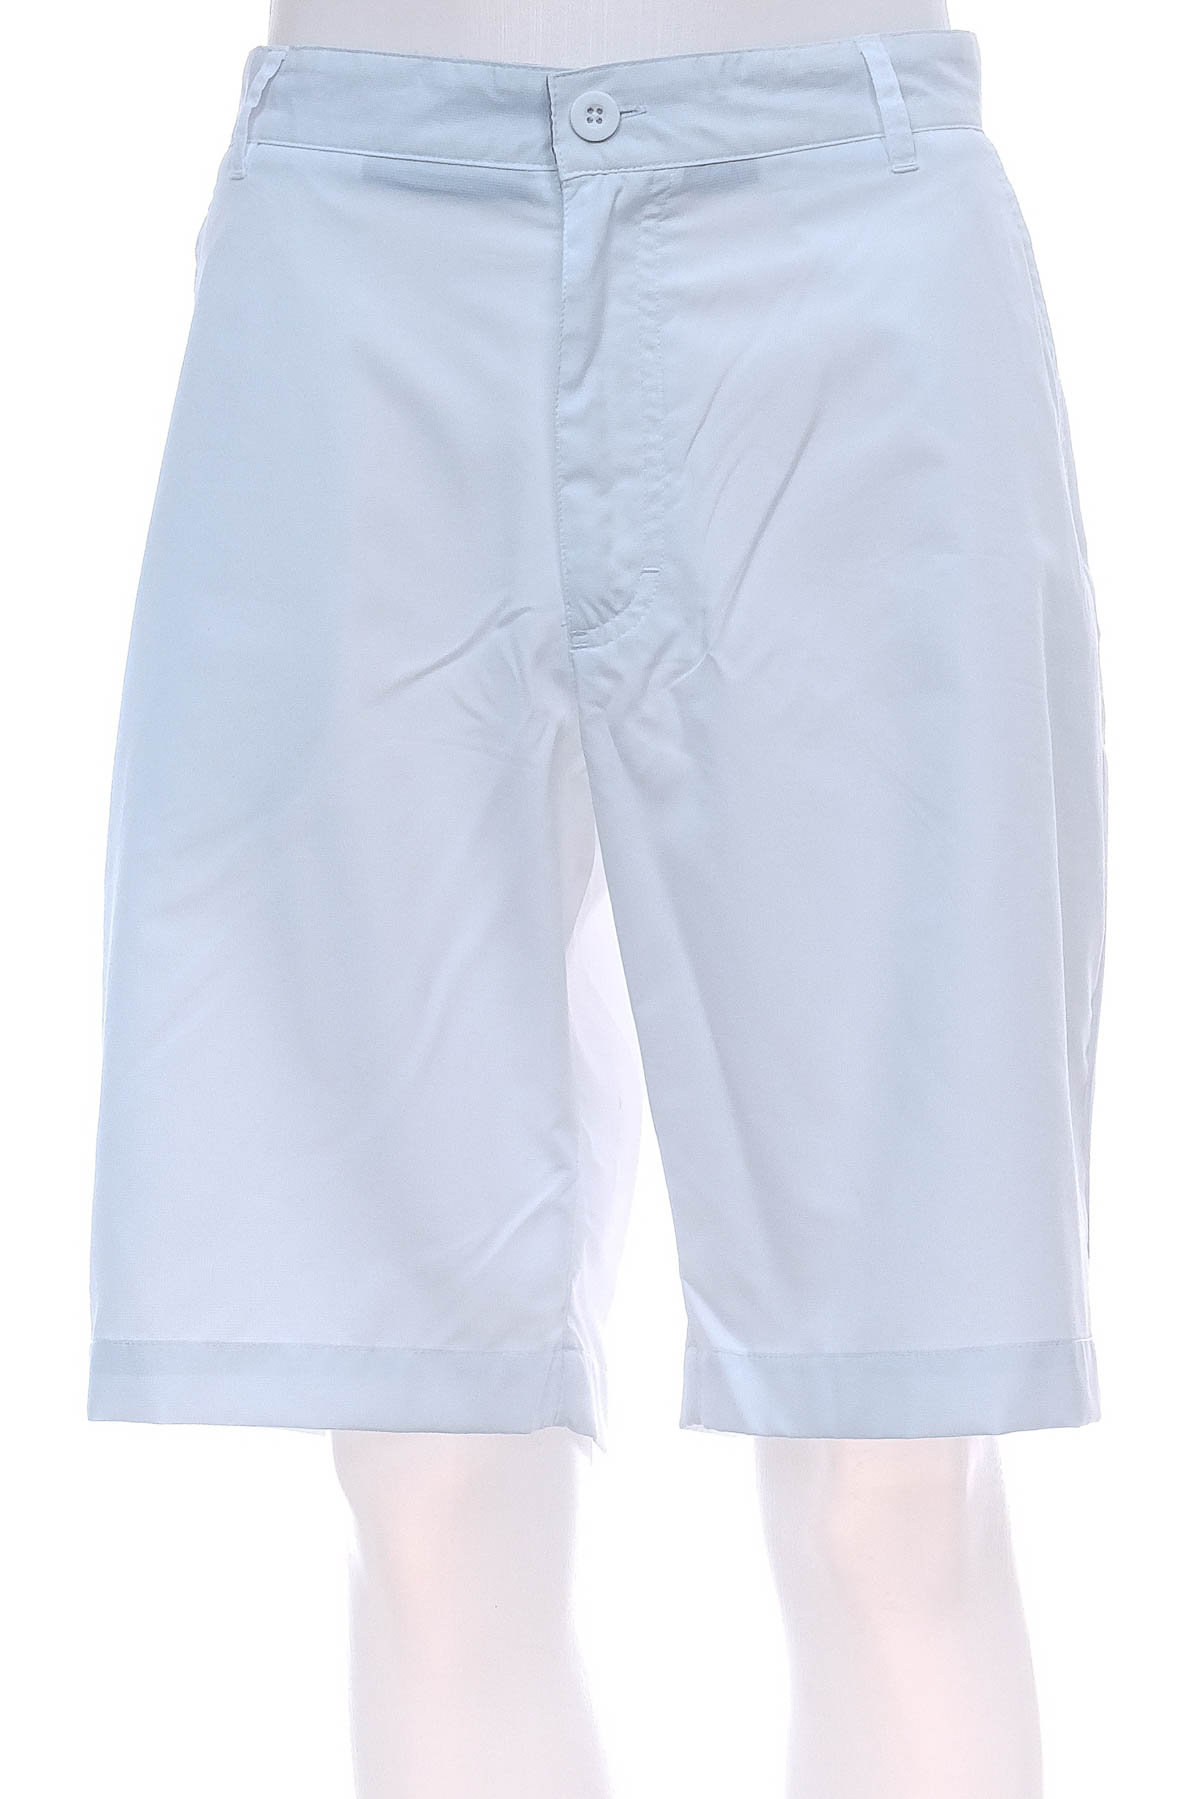 Men's shorts - Oxylane - 0